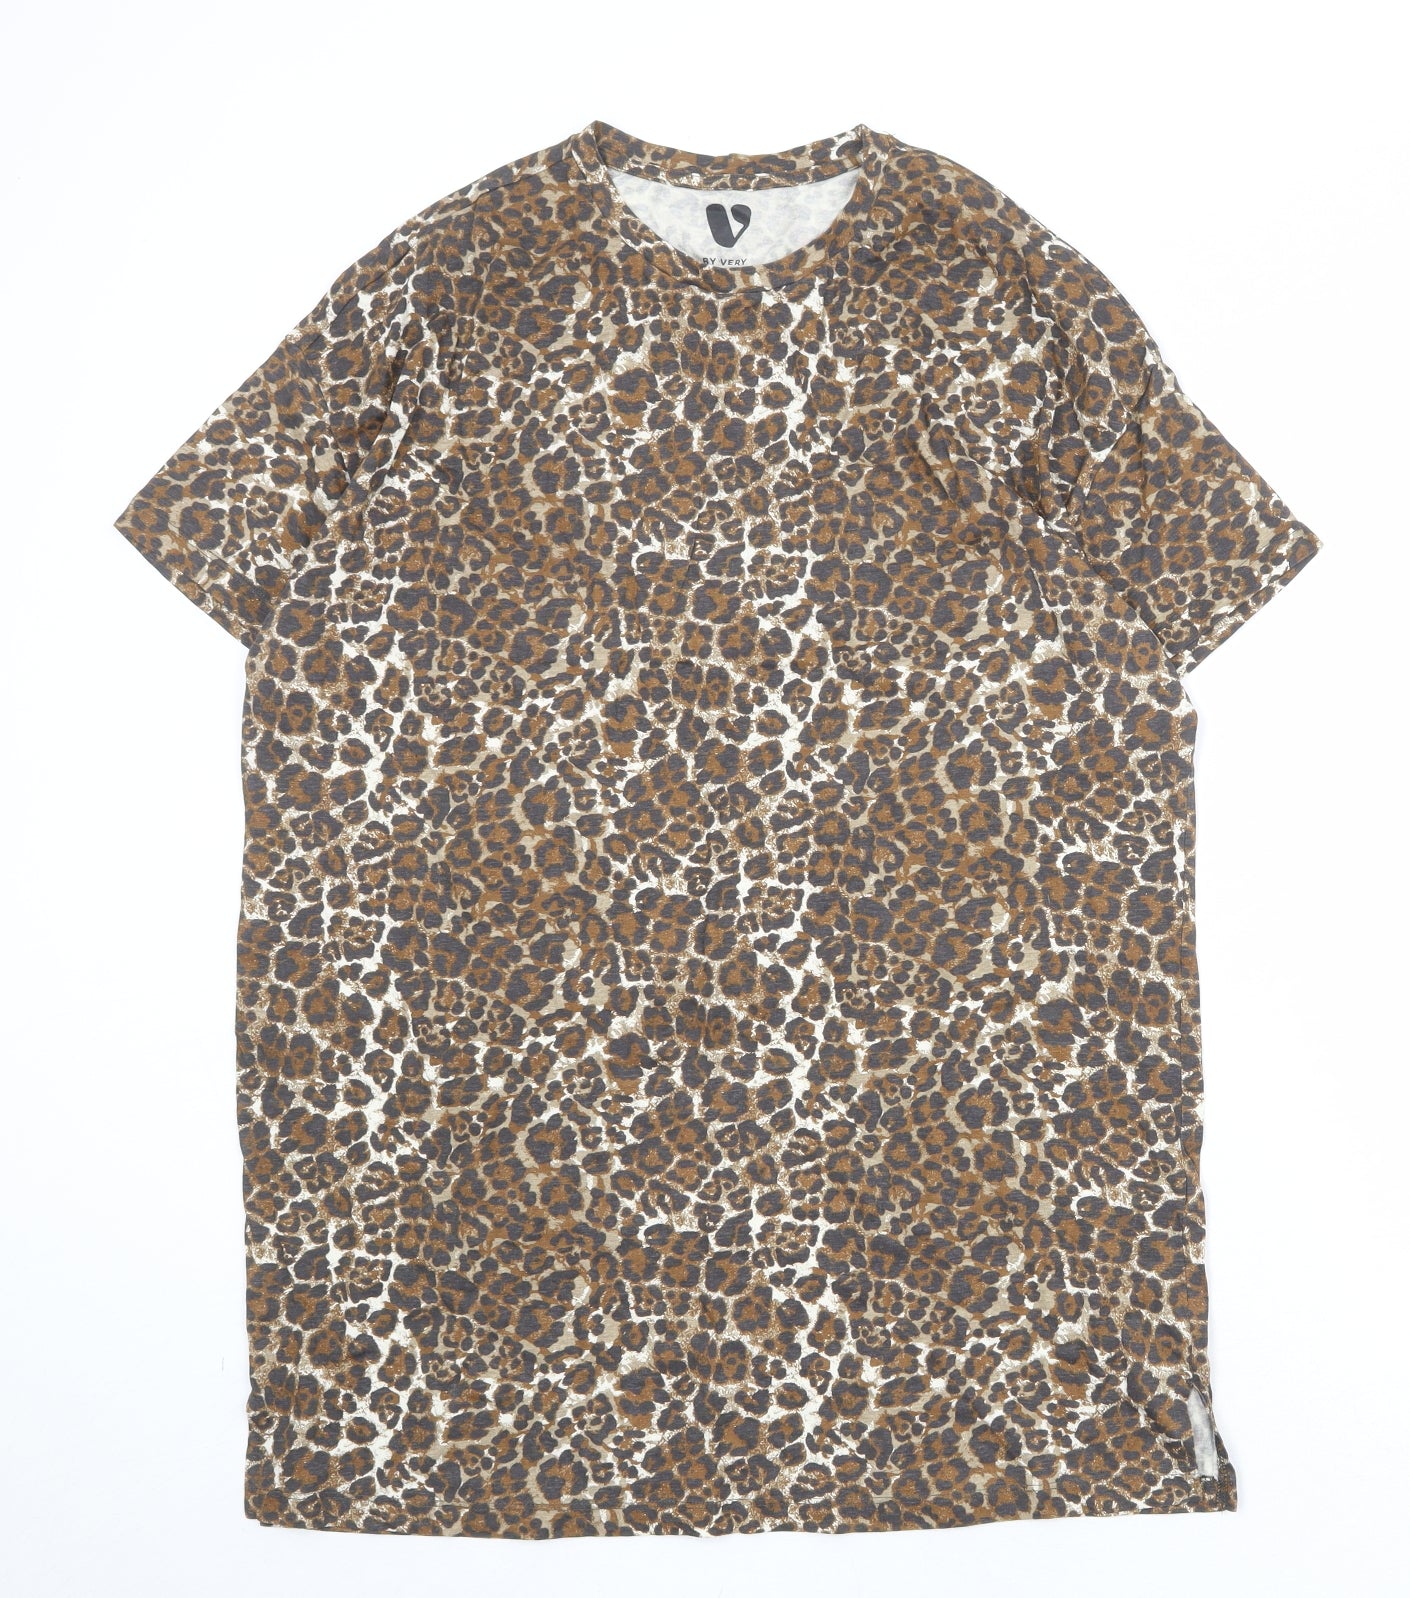 Very Womens Brown Animal Print 100% Cotton Basic T-Shirt Size 12 Crew Neck - Leopard Print